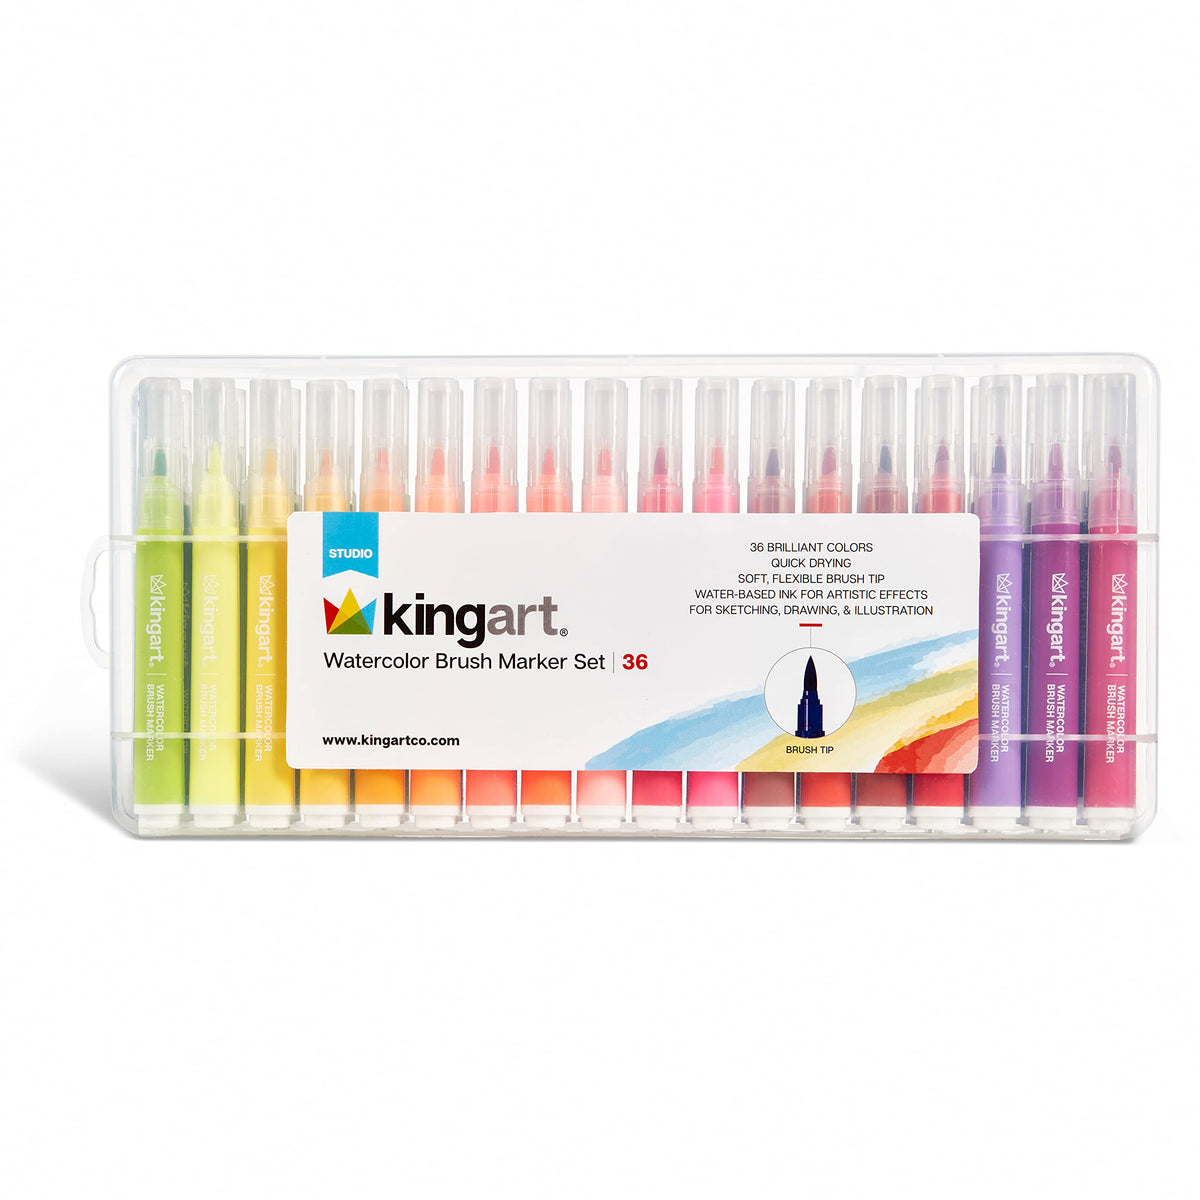 KingArt kingart pro dual twin-tip brush pens, set of 48 unique & vivid  colors, watercolor markers with flexible nylon brush tips, pro